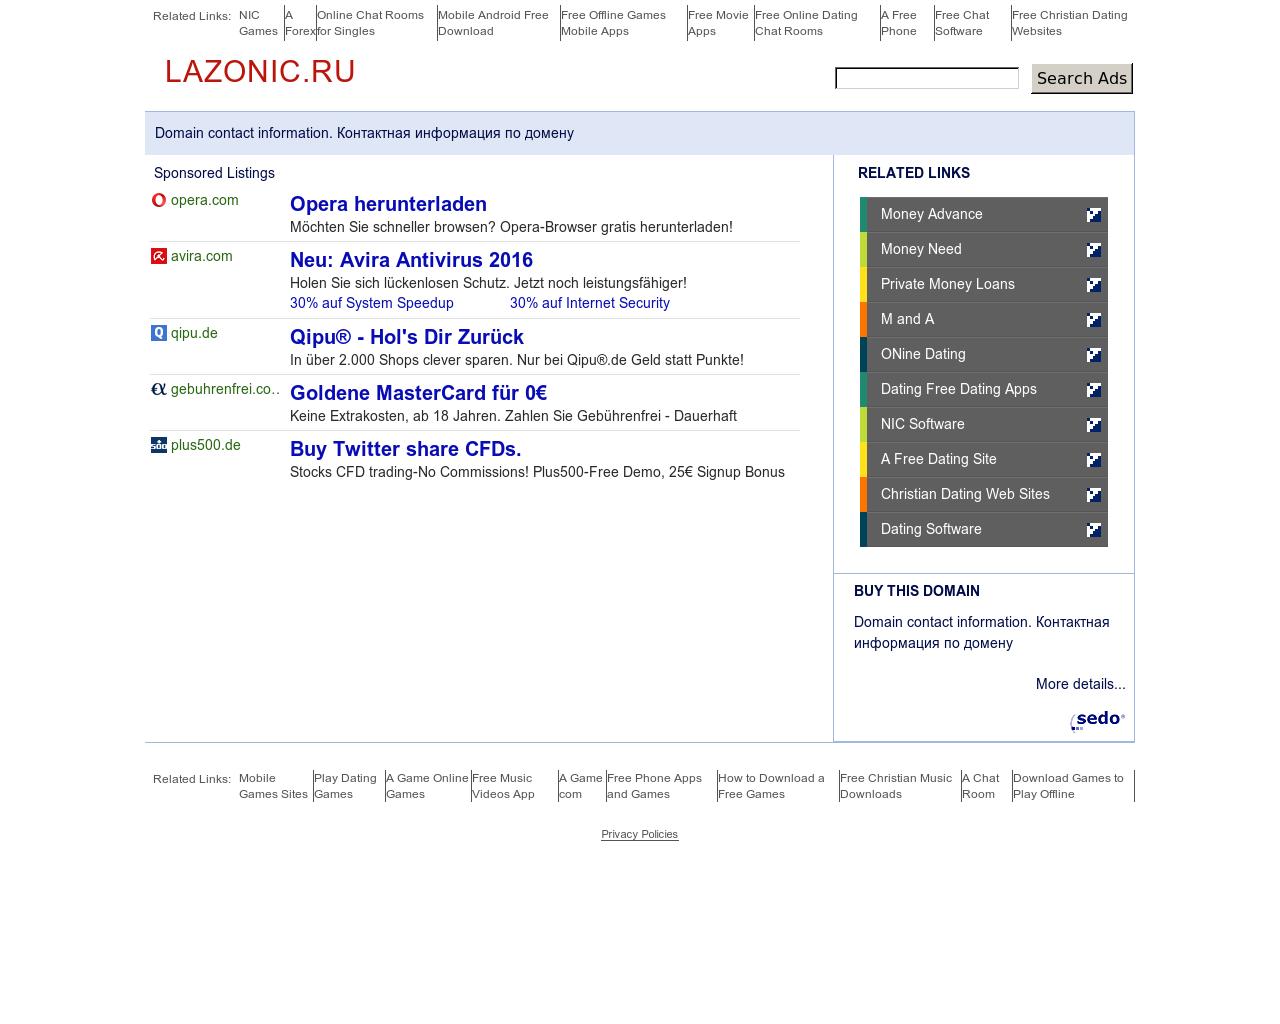 Изображение сайта lazonic.ru в разрешении 1280x1024